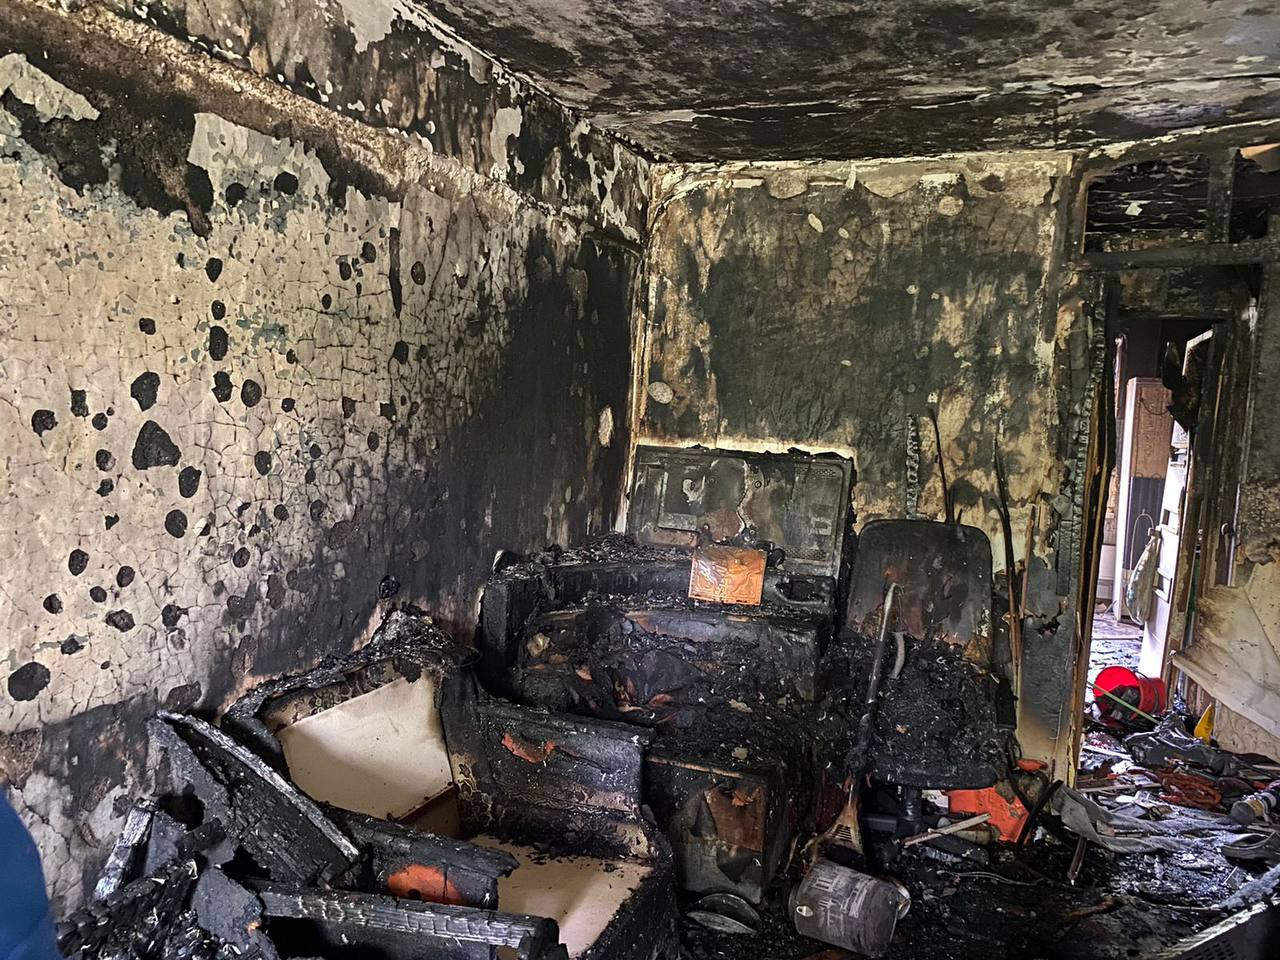 5 мая 19 год. Квартира после пожара. Пожар в квартире.